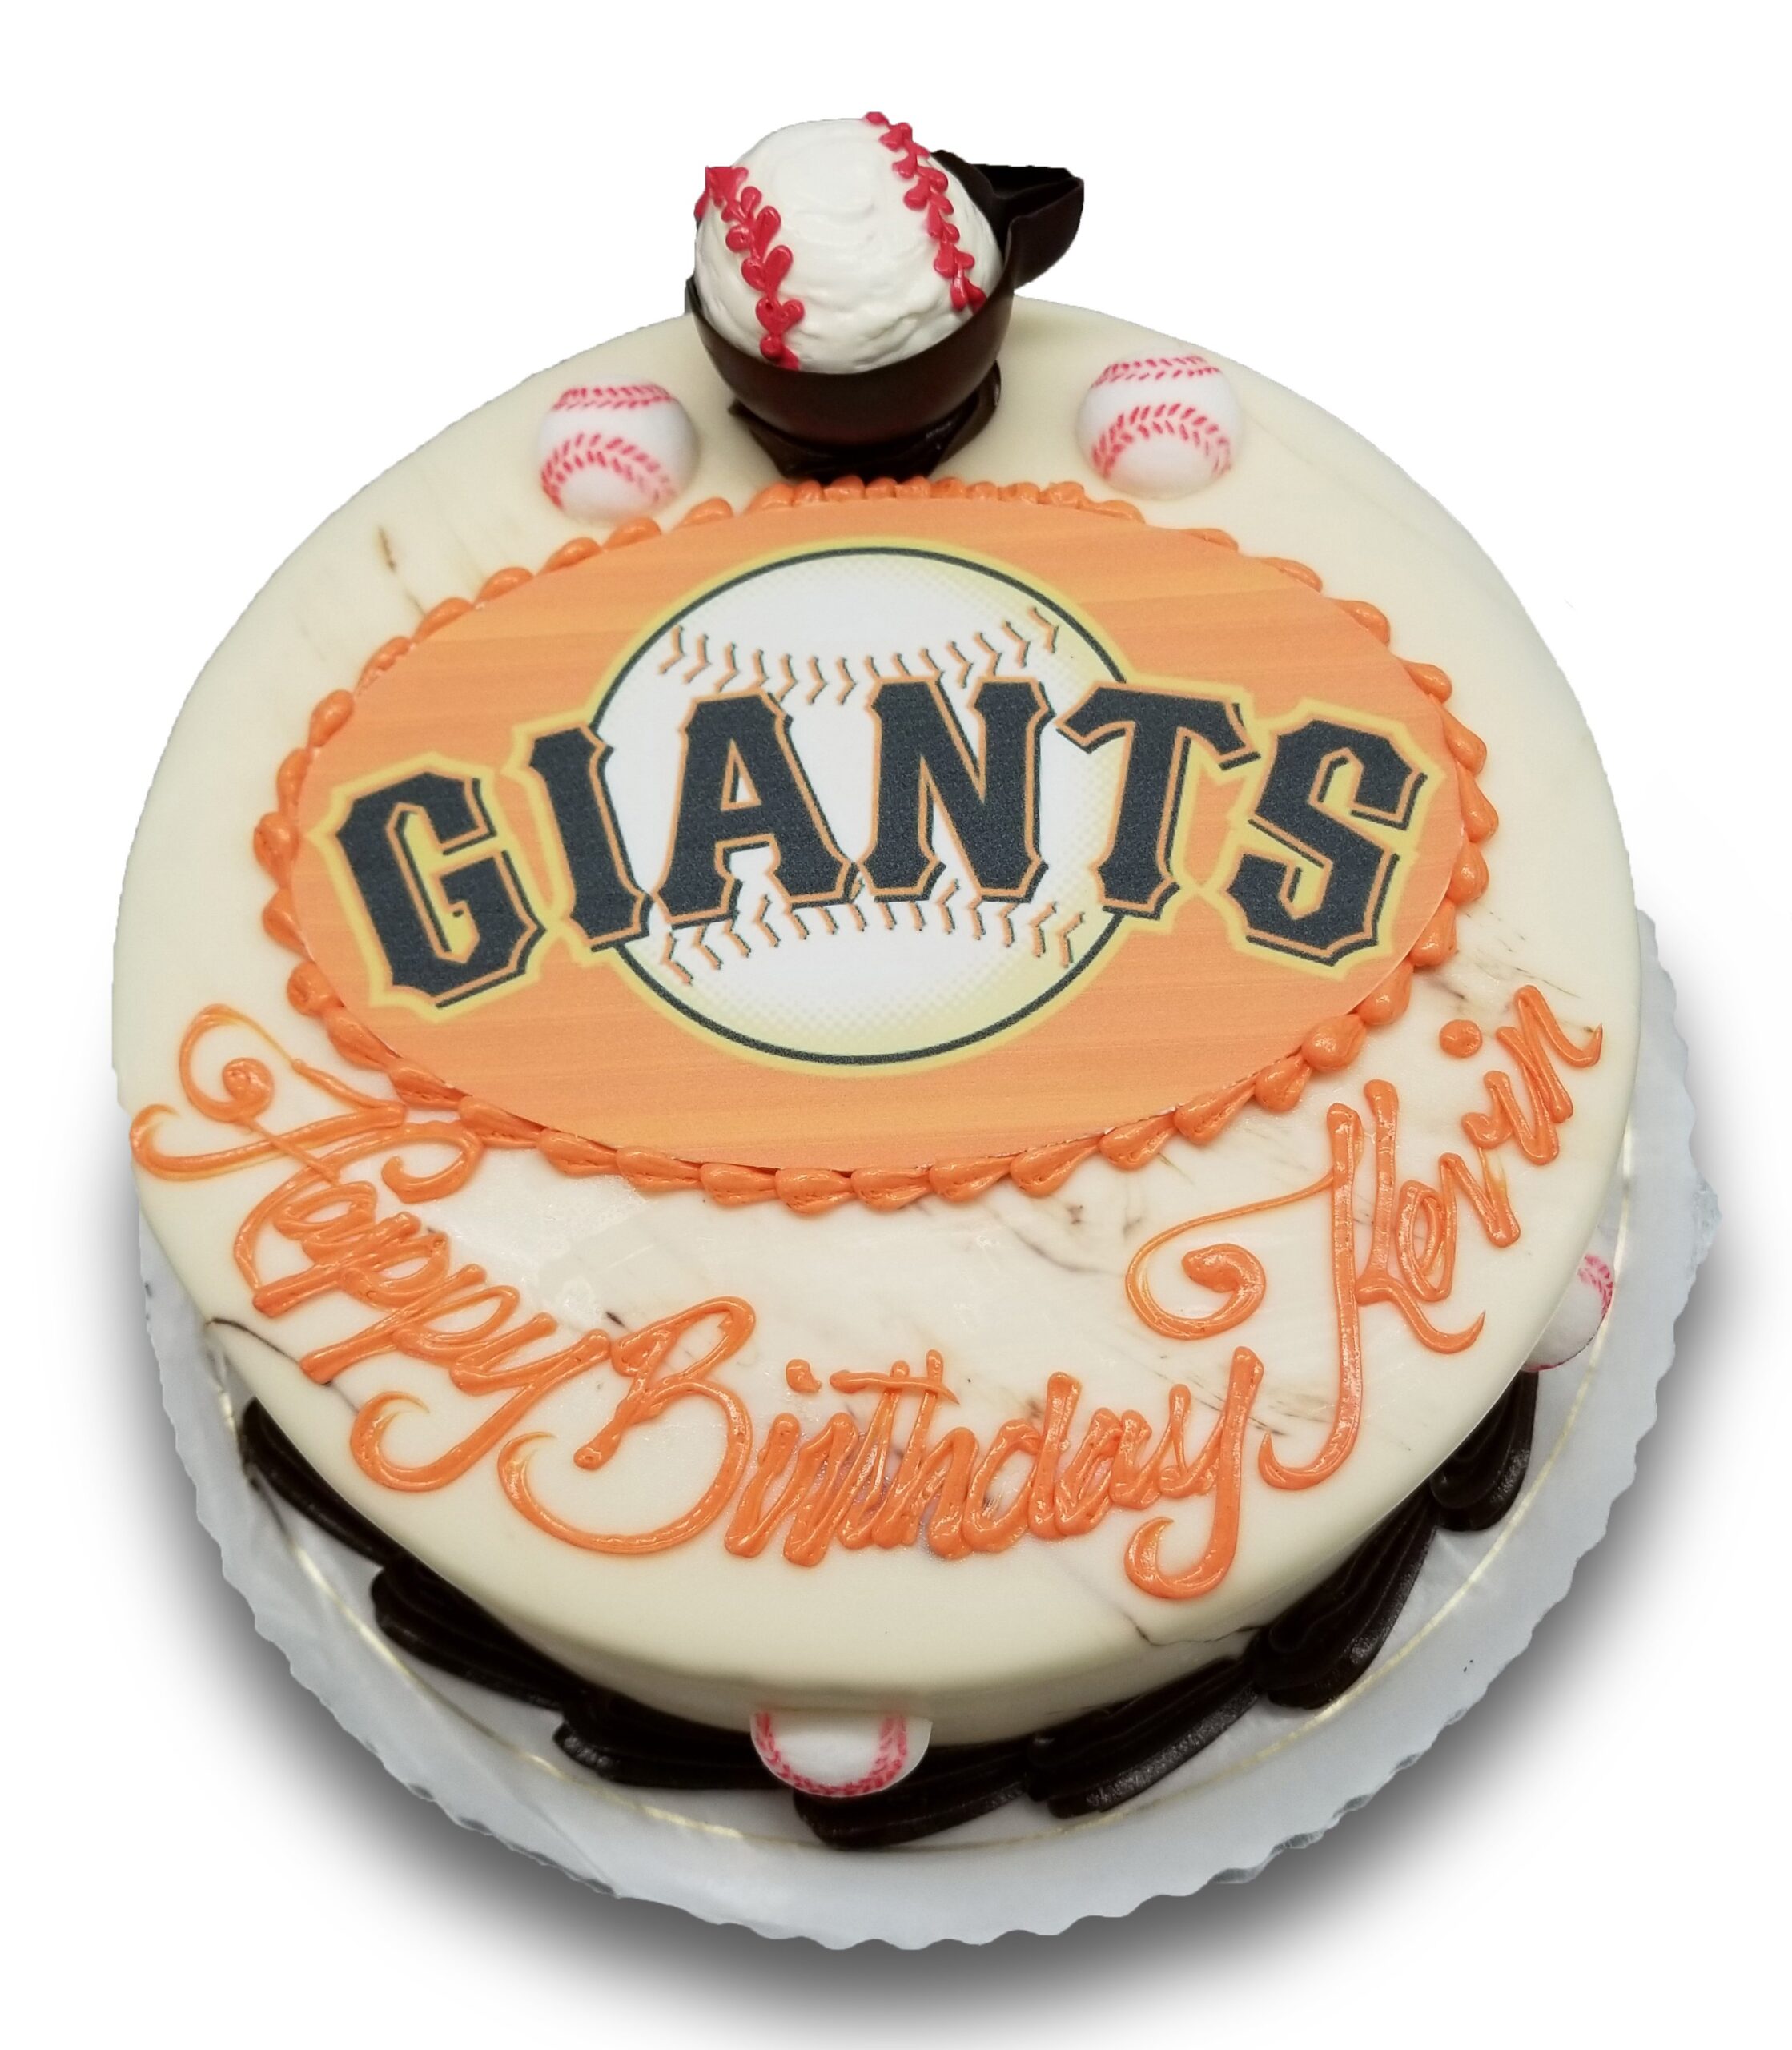 Giants scan birthday cake with sugar baseballs